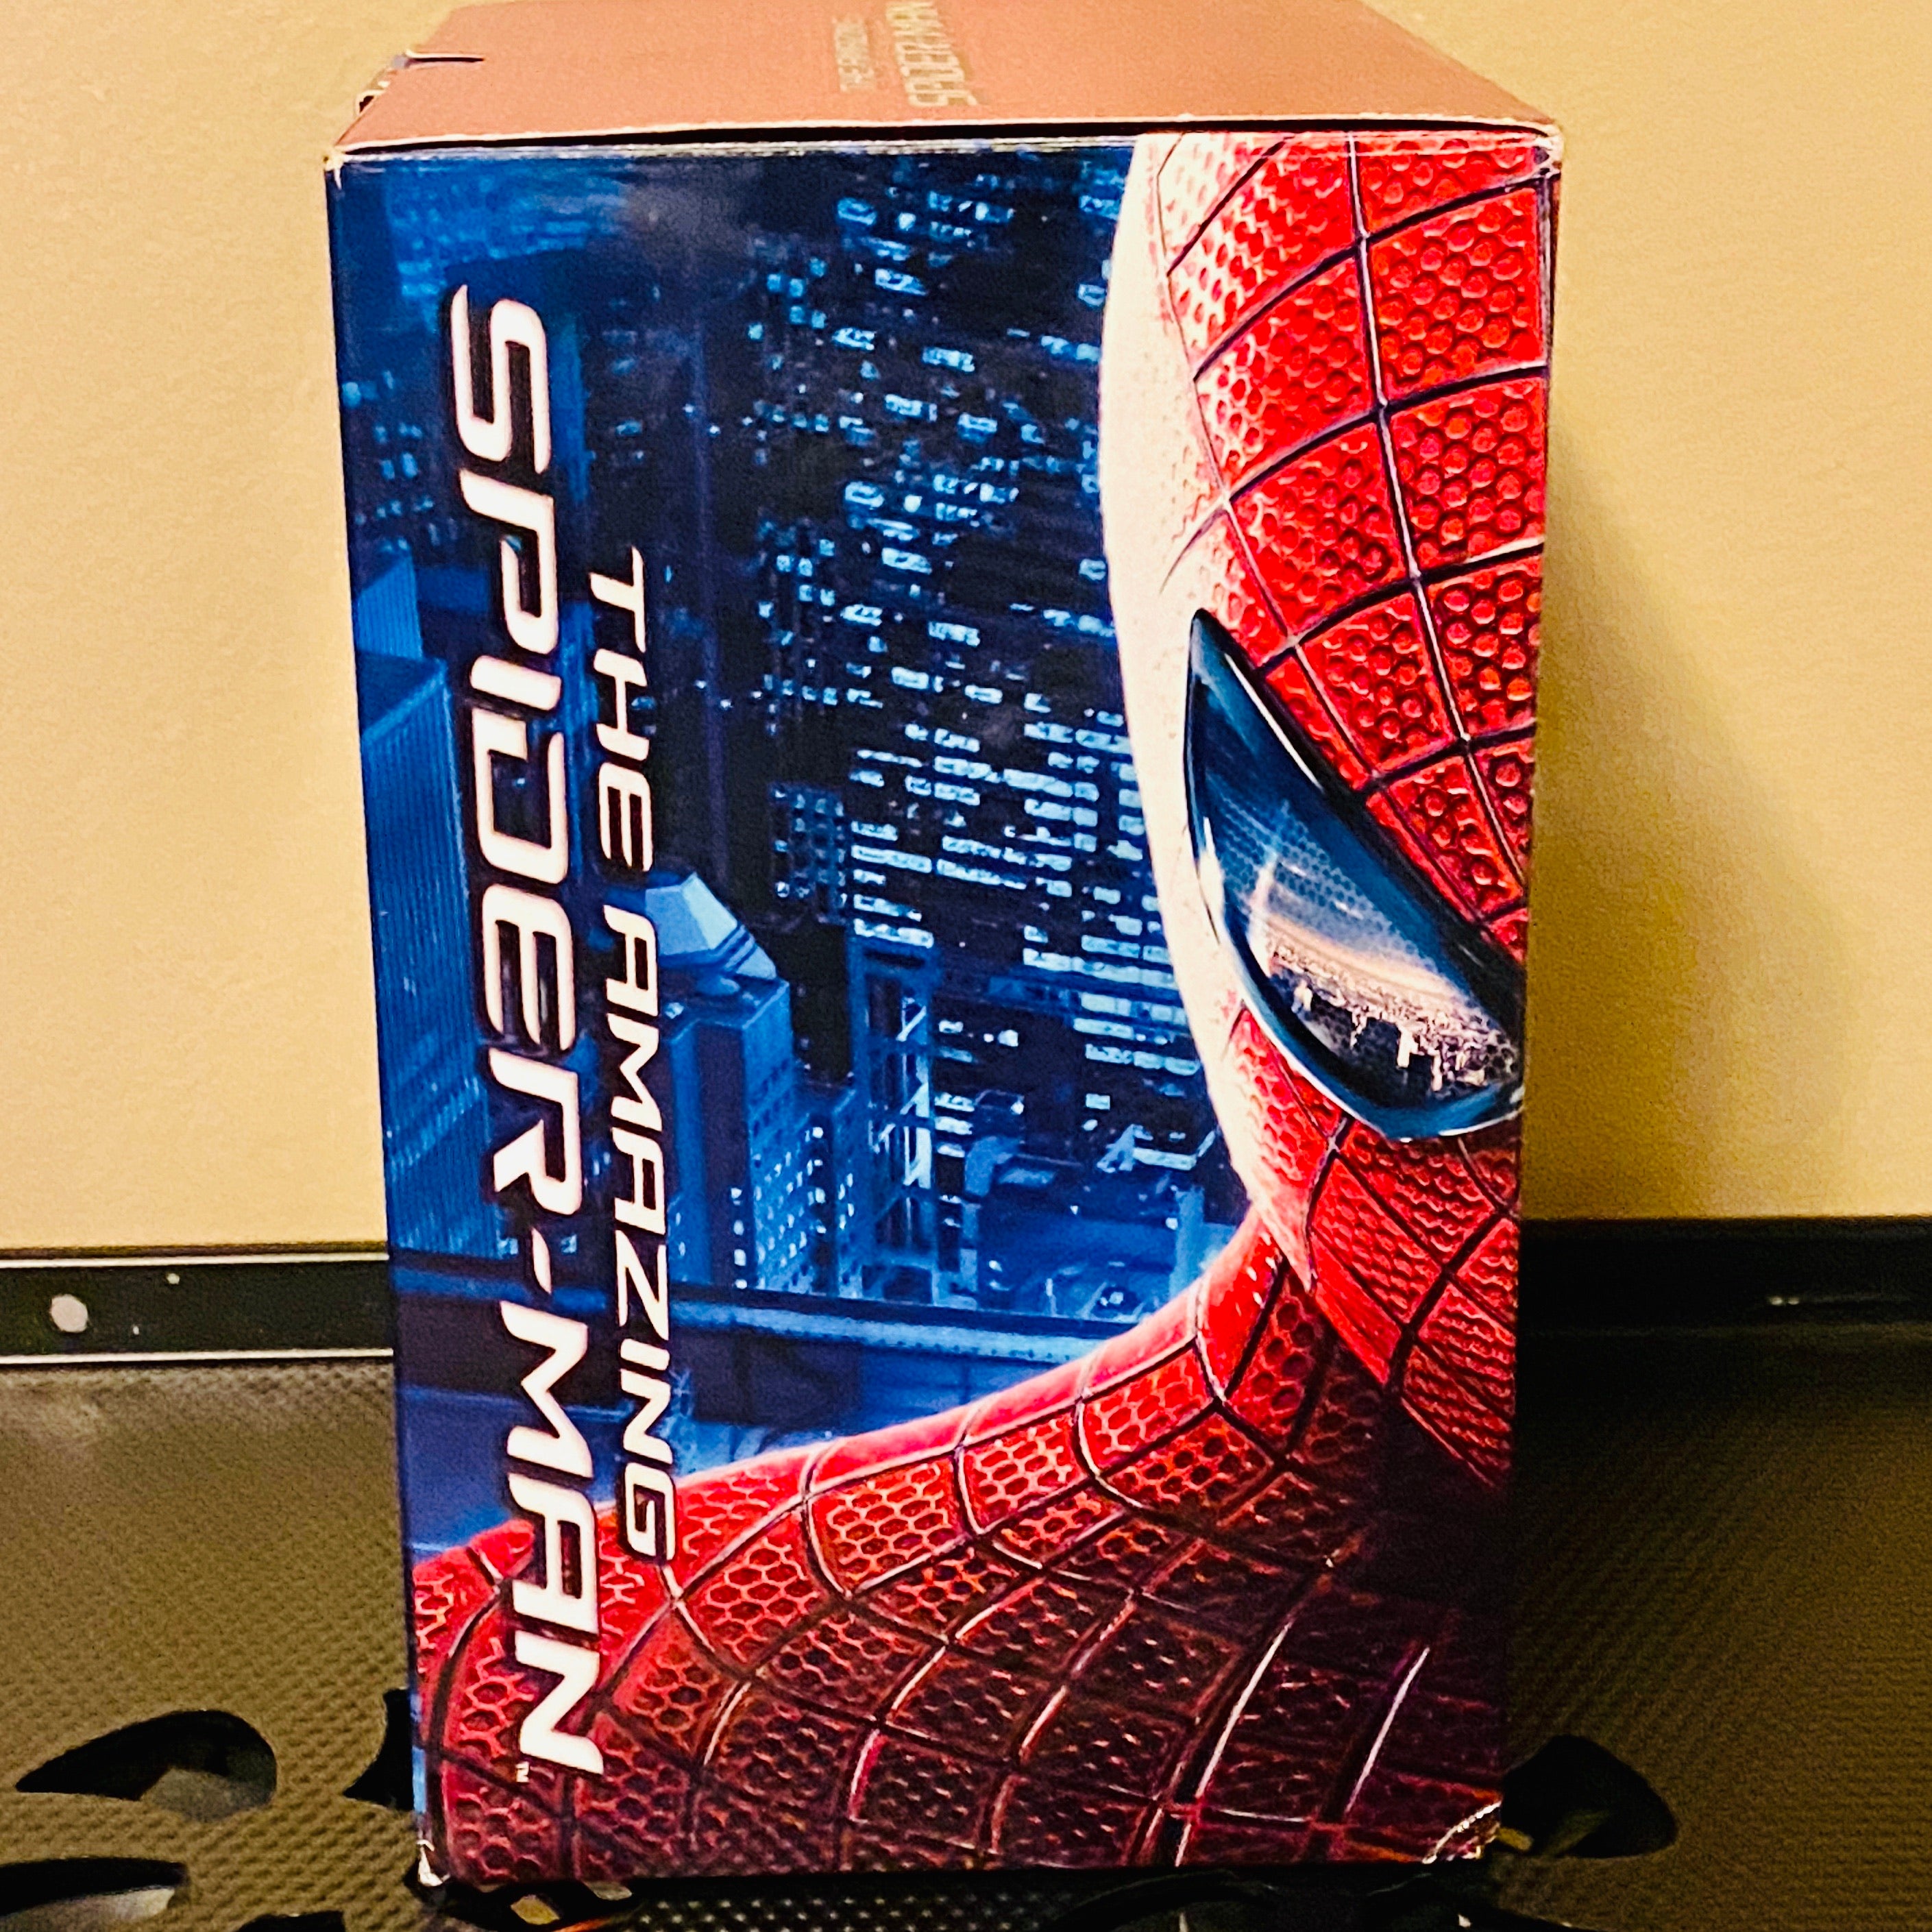 Spider-Man (The Amazing Spider-Man) (Metallic) (Blu-ray)